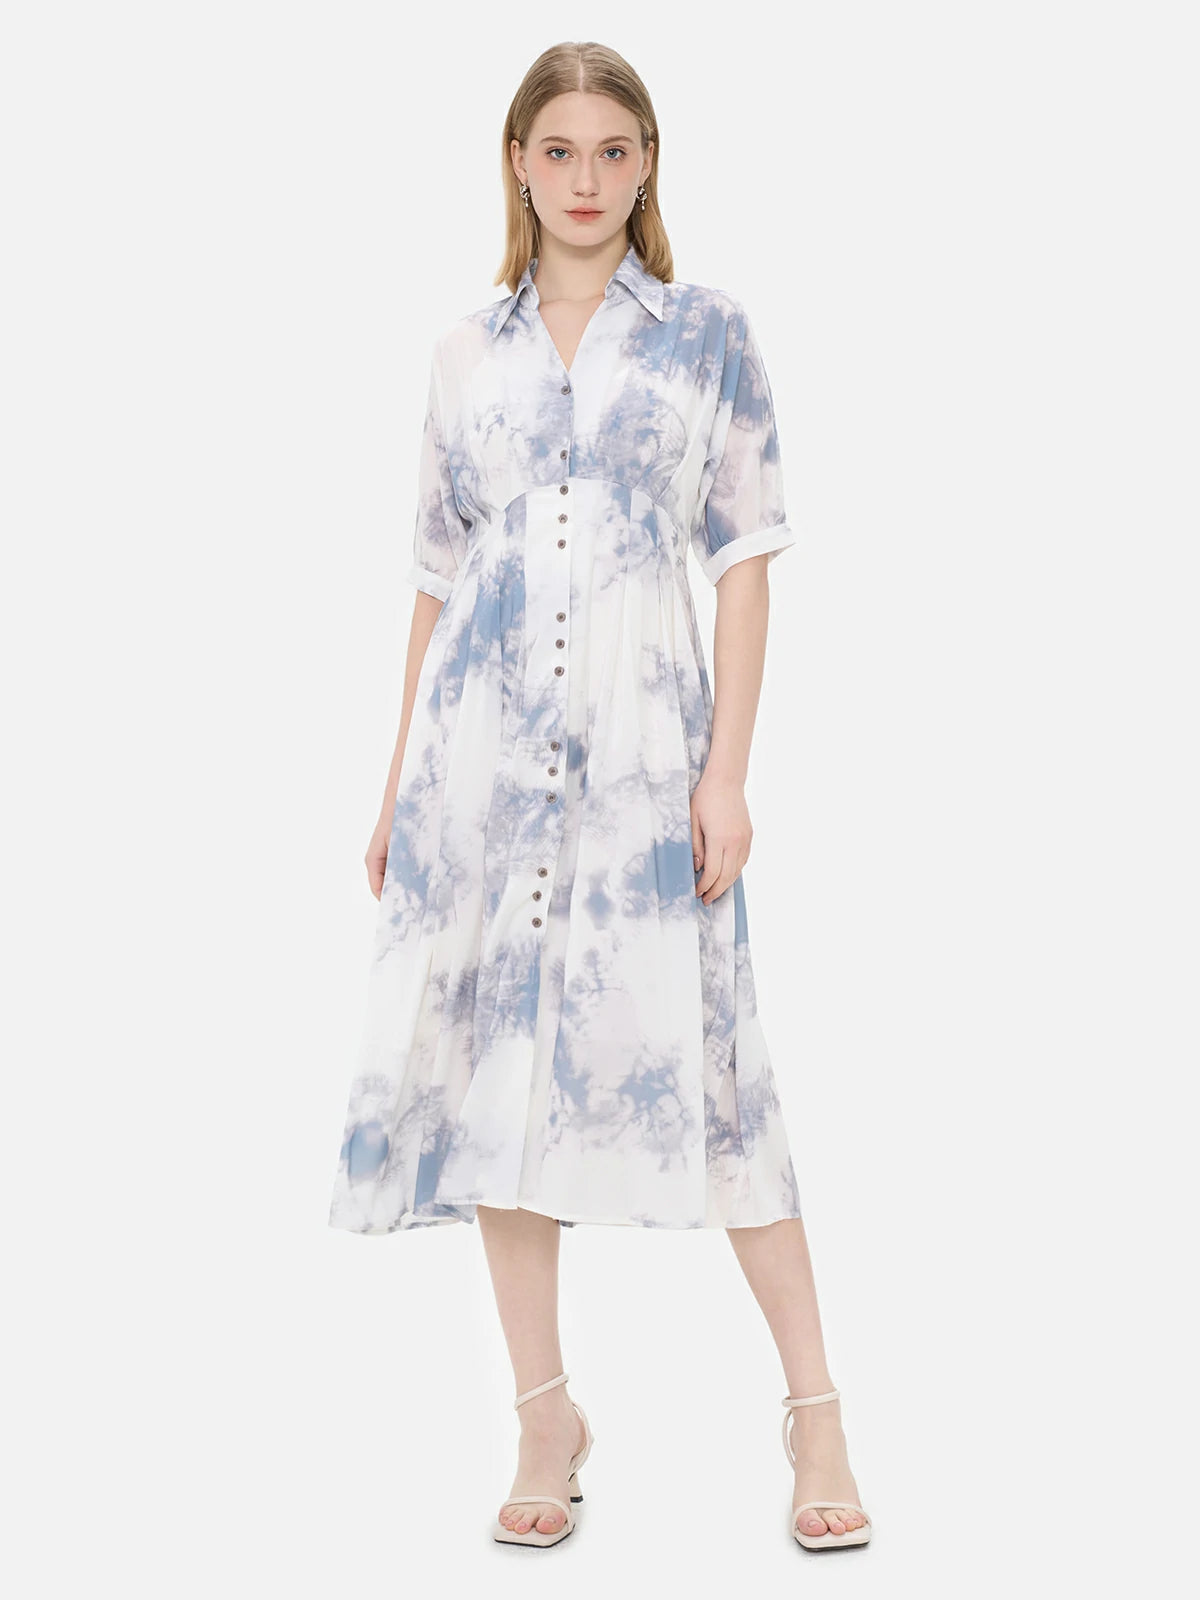 Elegant V-neck dress with ink wash blurring print for a unique fashion statement